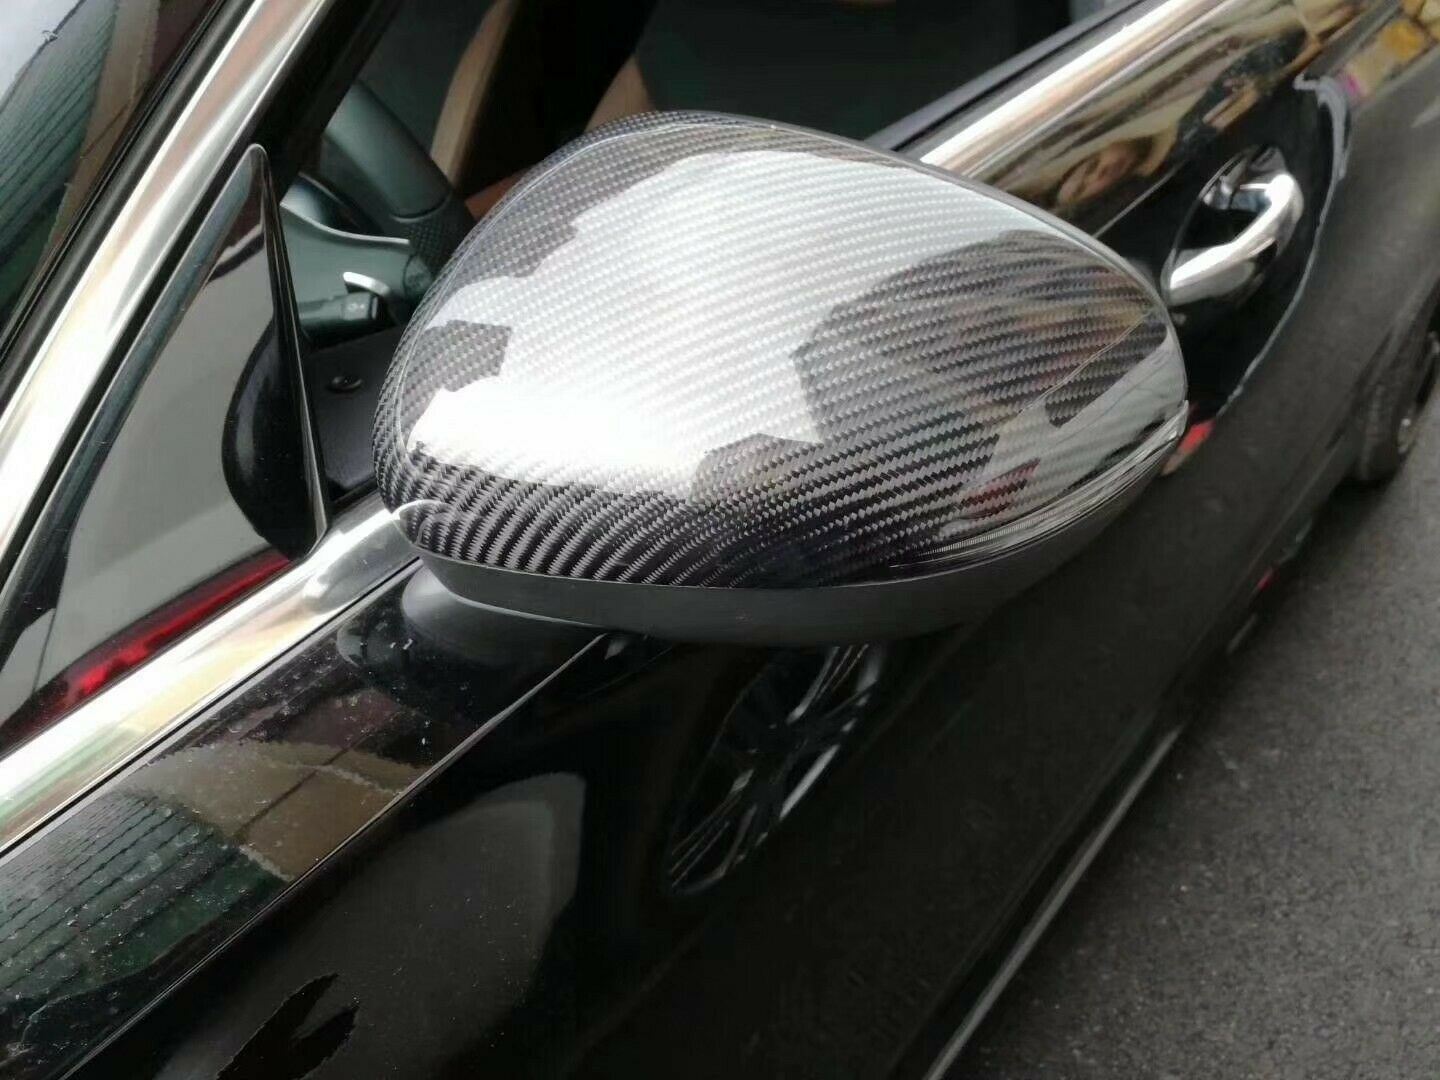 Mercedes A-Class Carbon Fibre Wing Mirror Covers Fiber W177 2018+ overlay